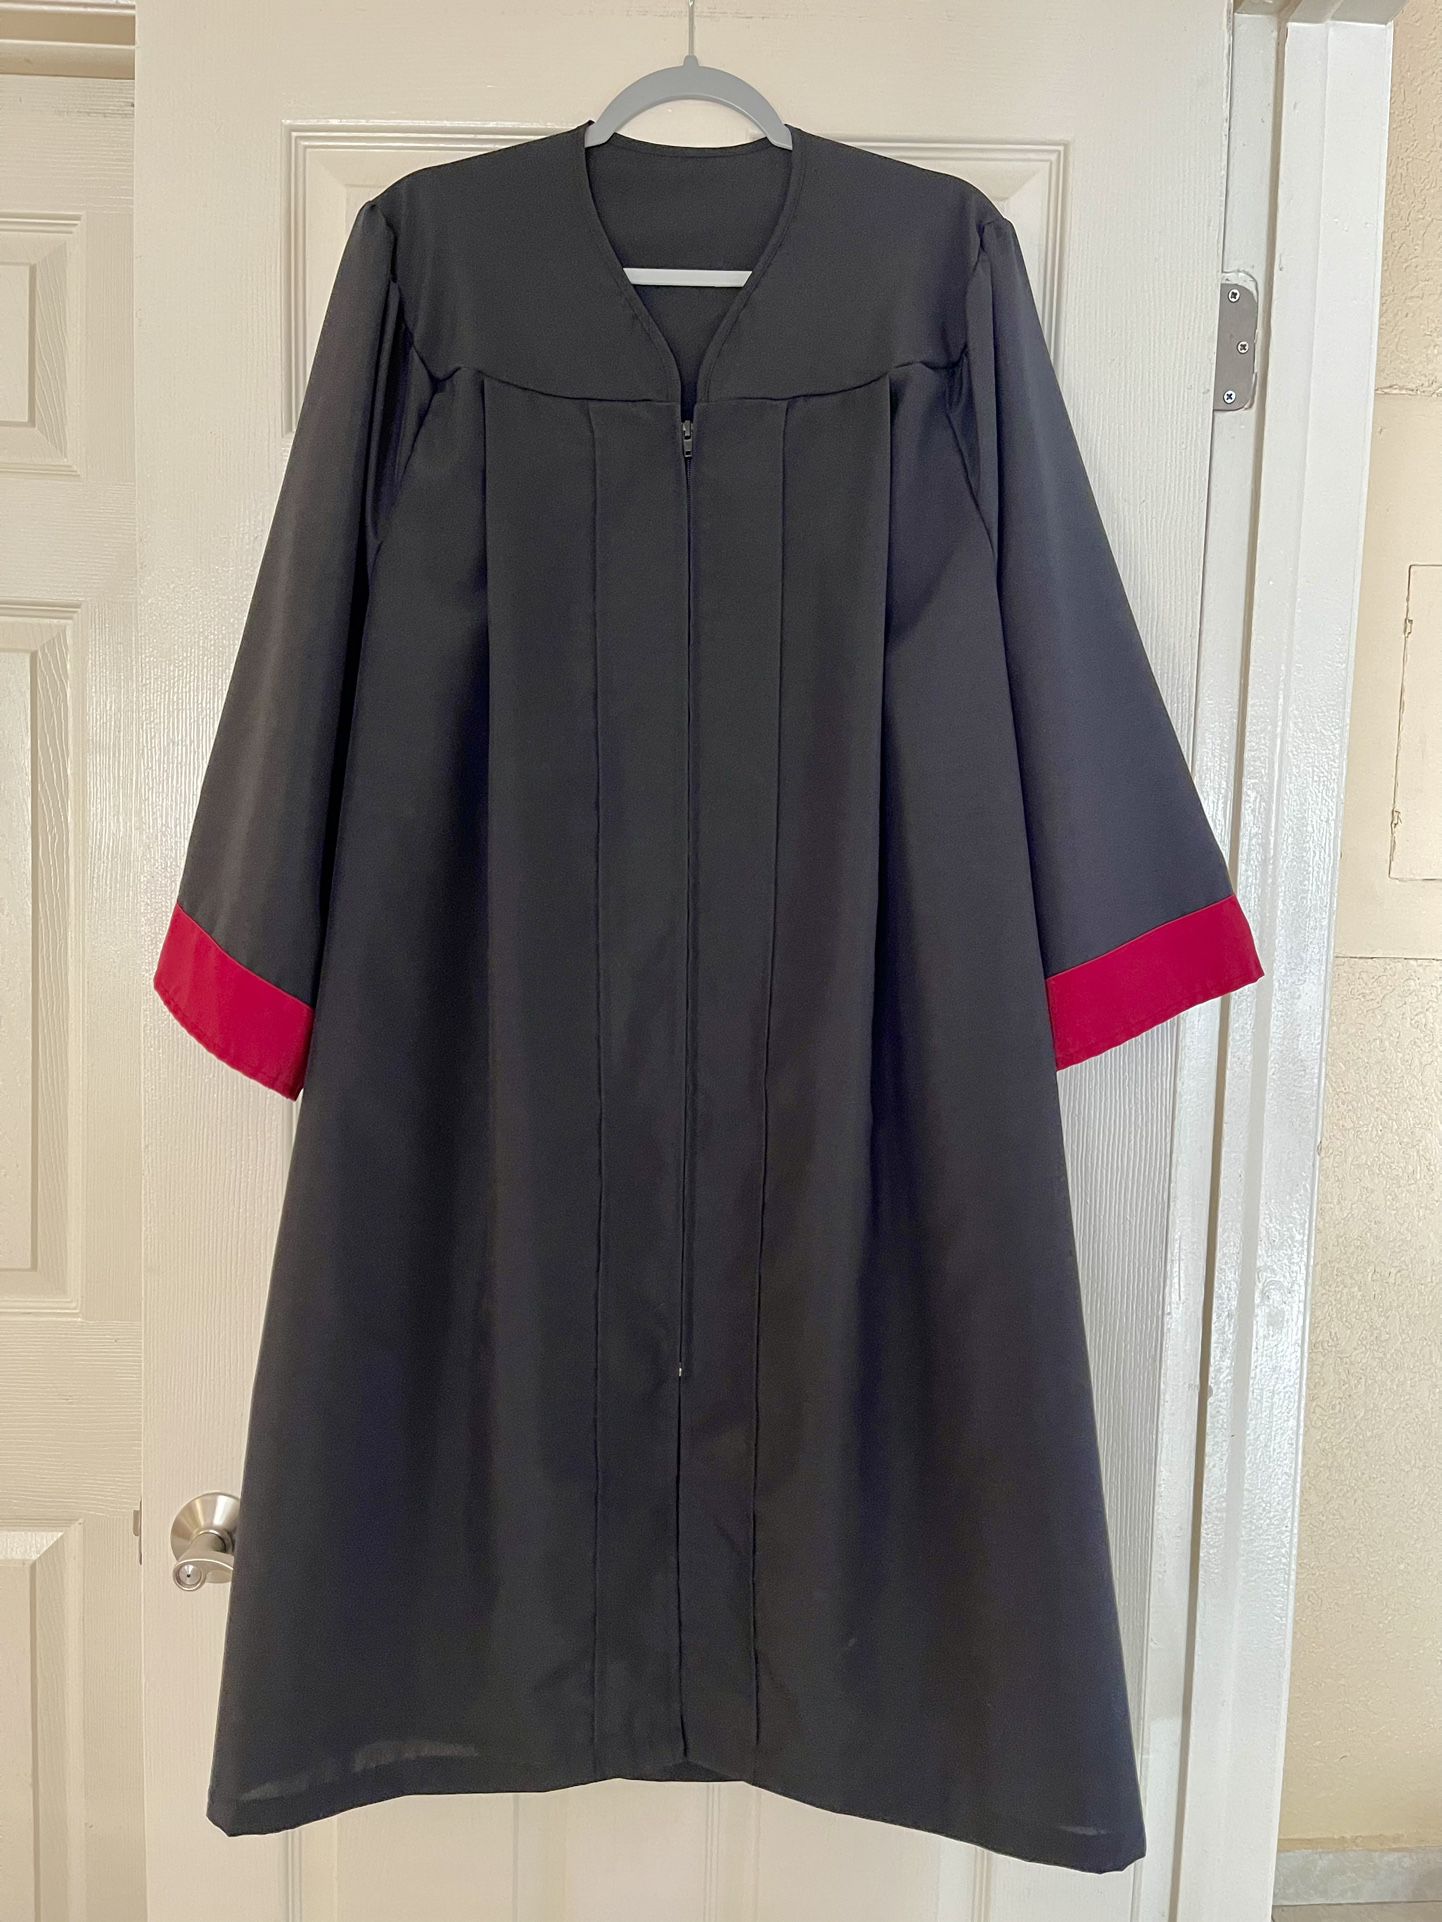 St. Thomas University Graduation Gown